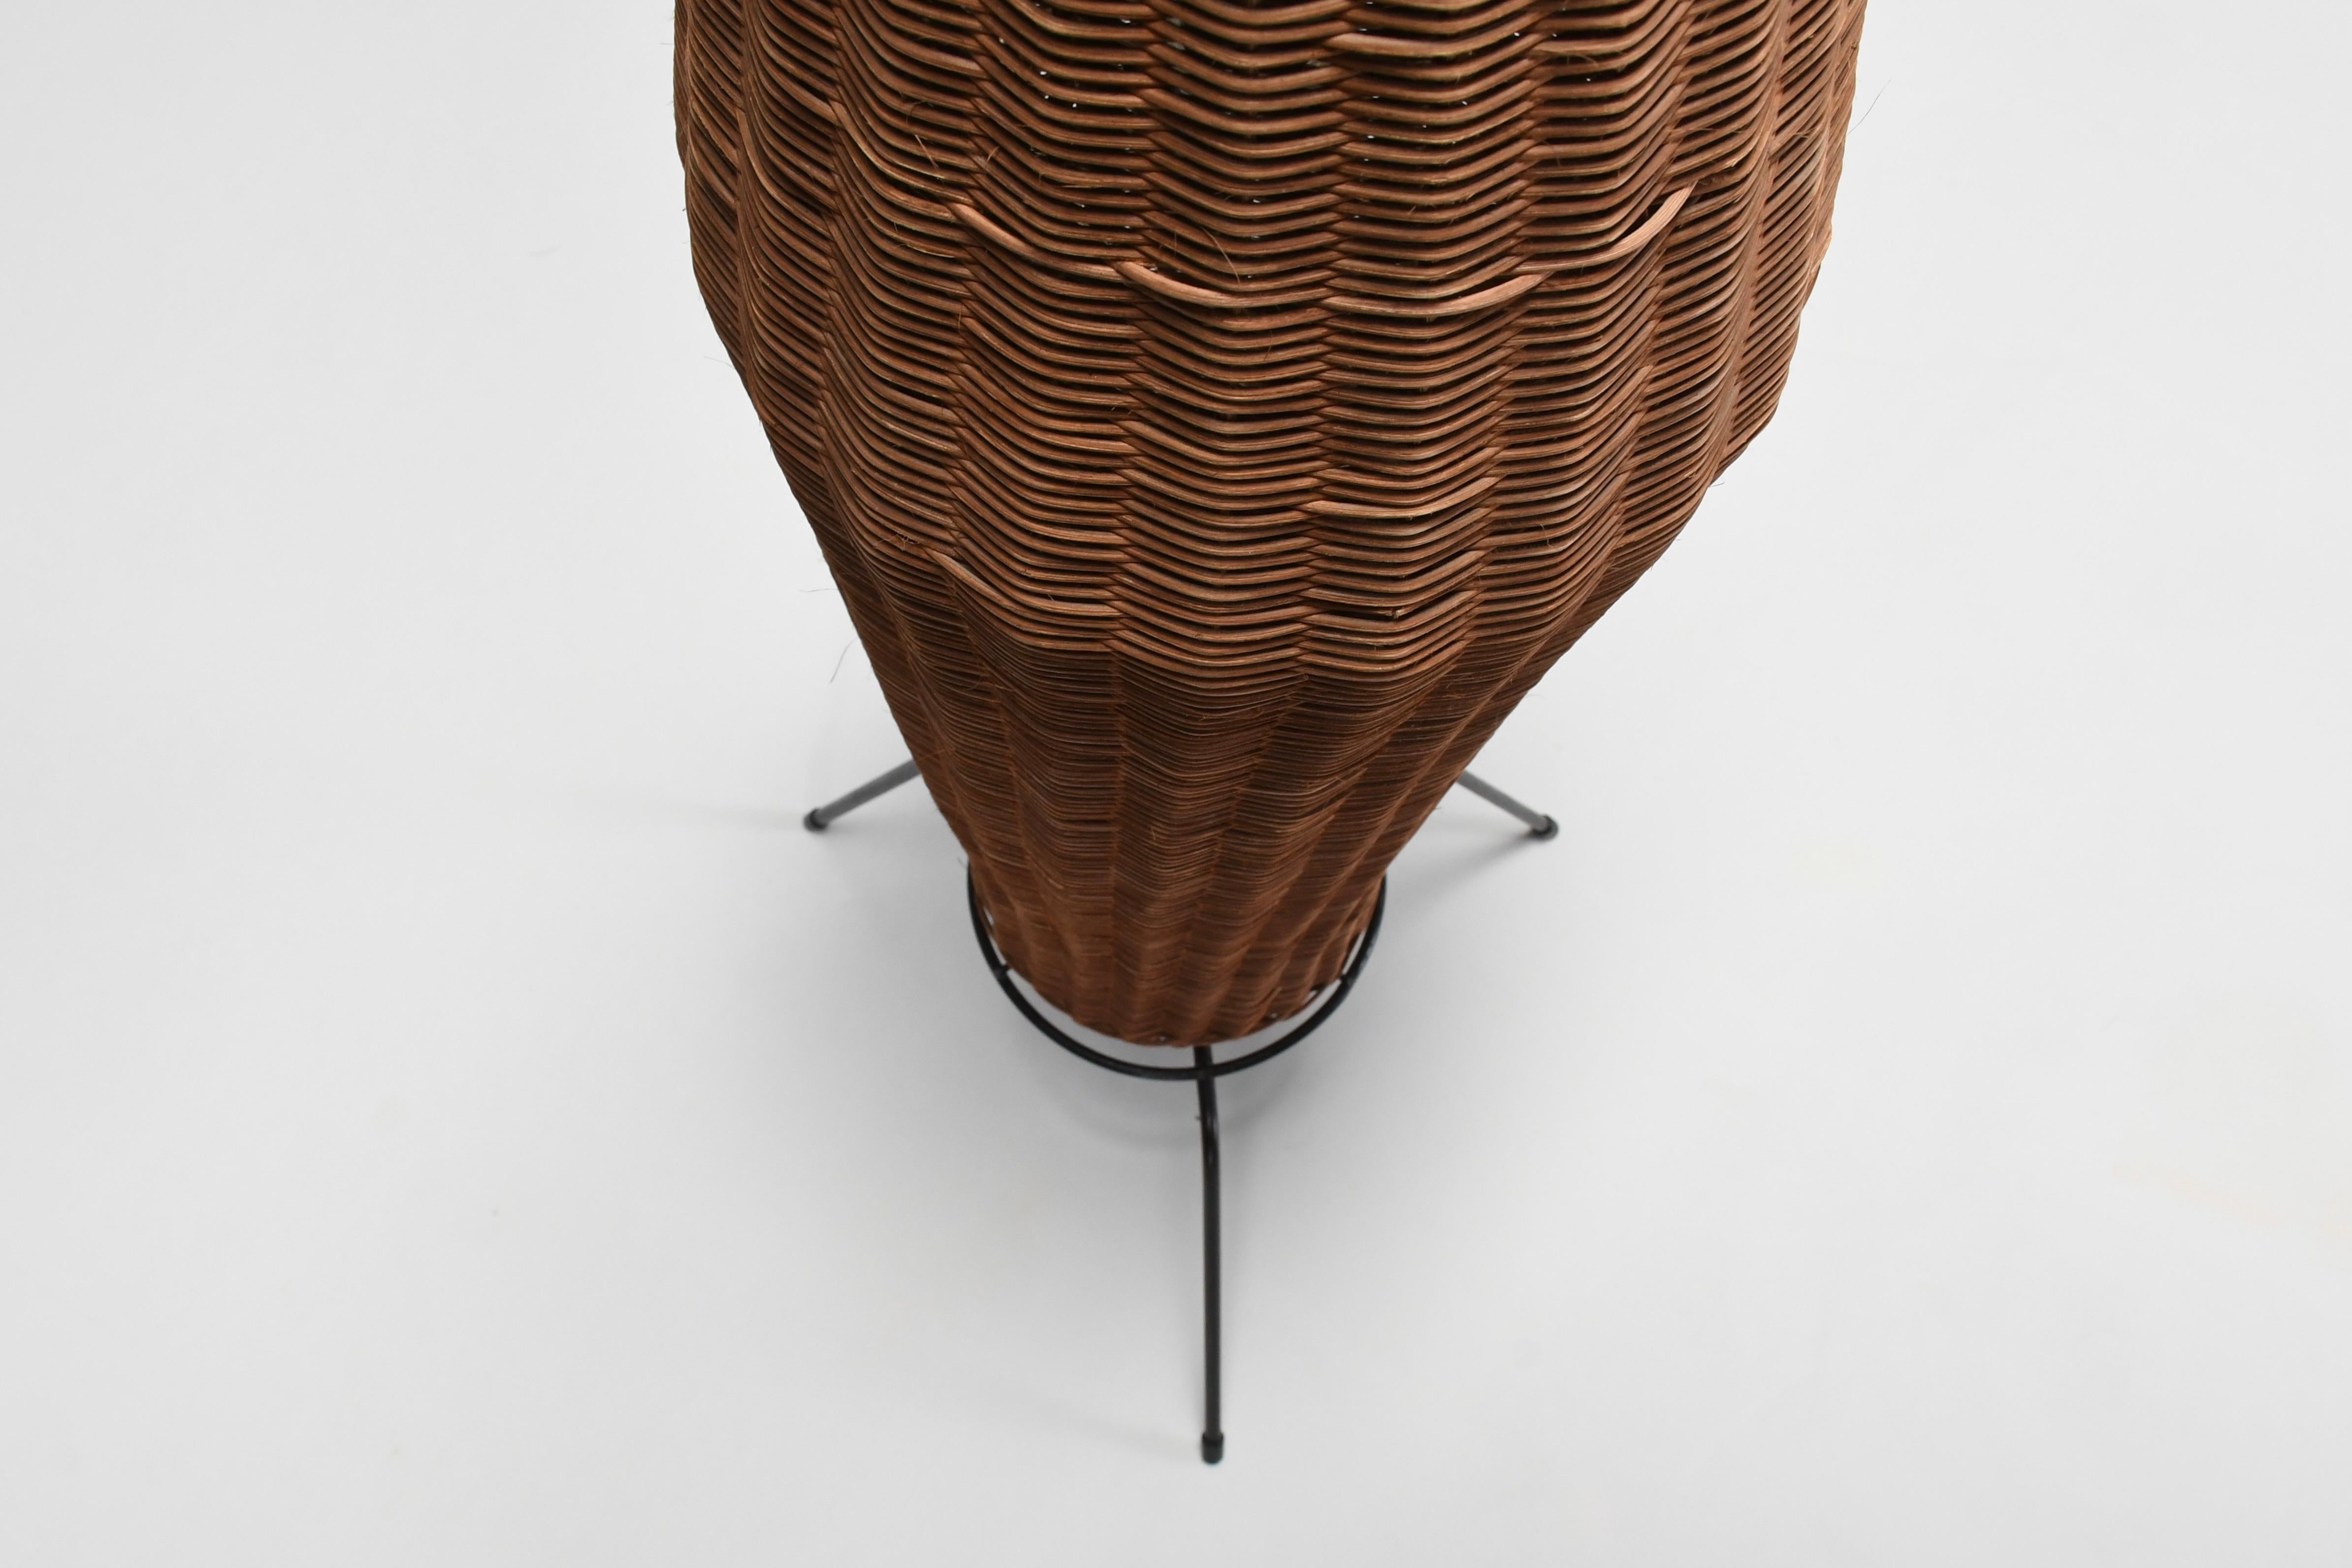 Metal Tripod Woven Rattan Basket Floor Lamp, France, 1950s For Sale